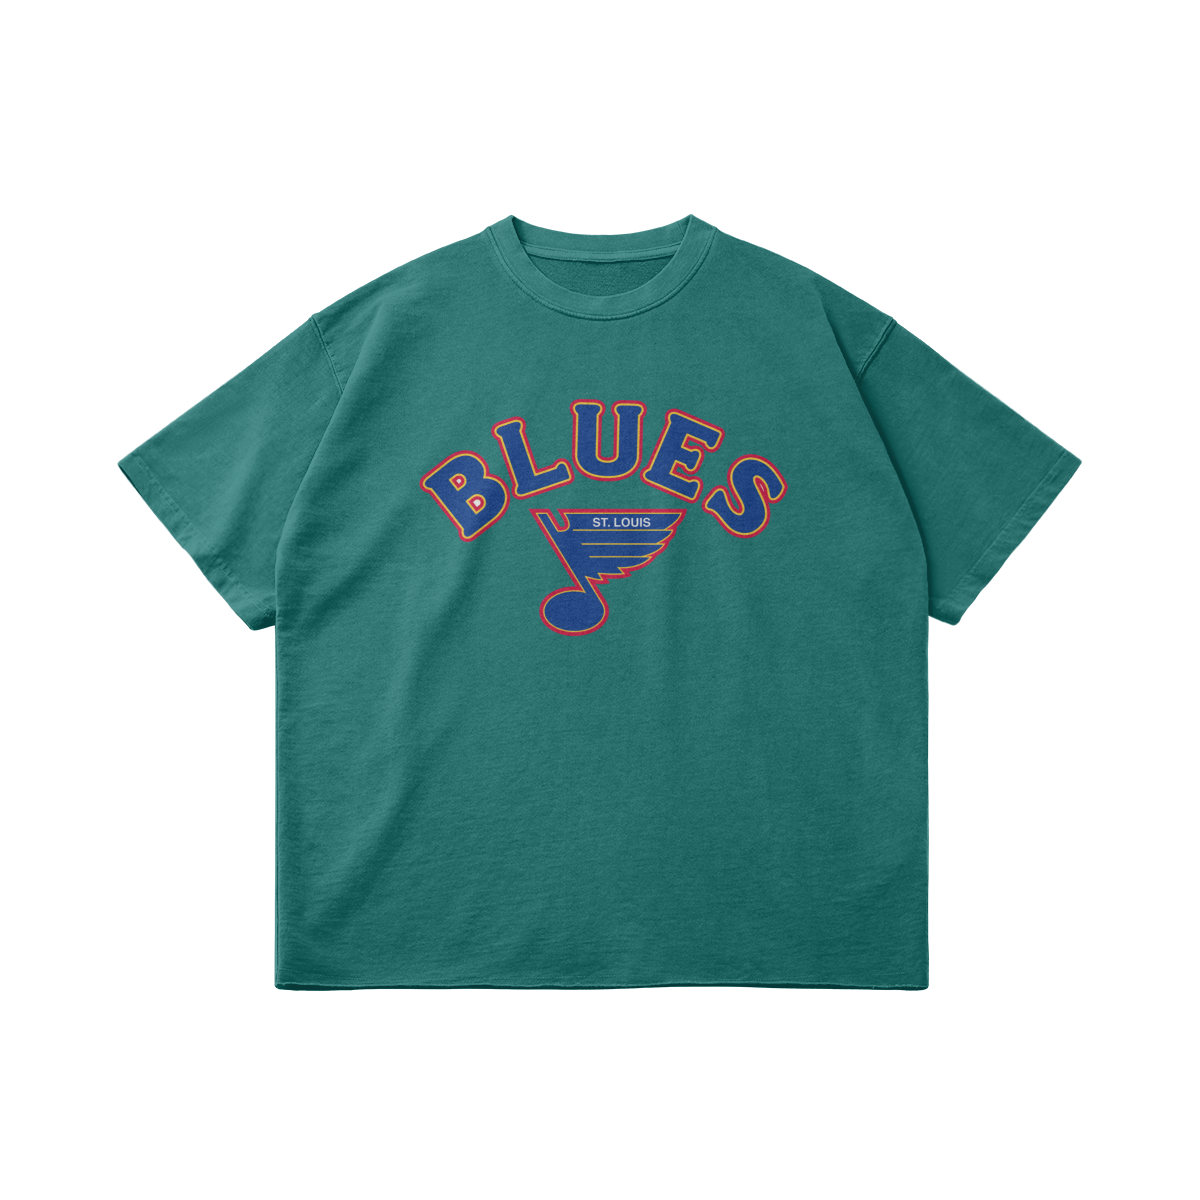 Vintage St. Louis Blues Tee